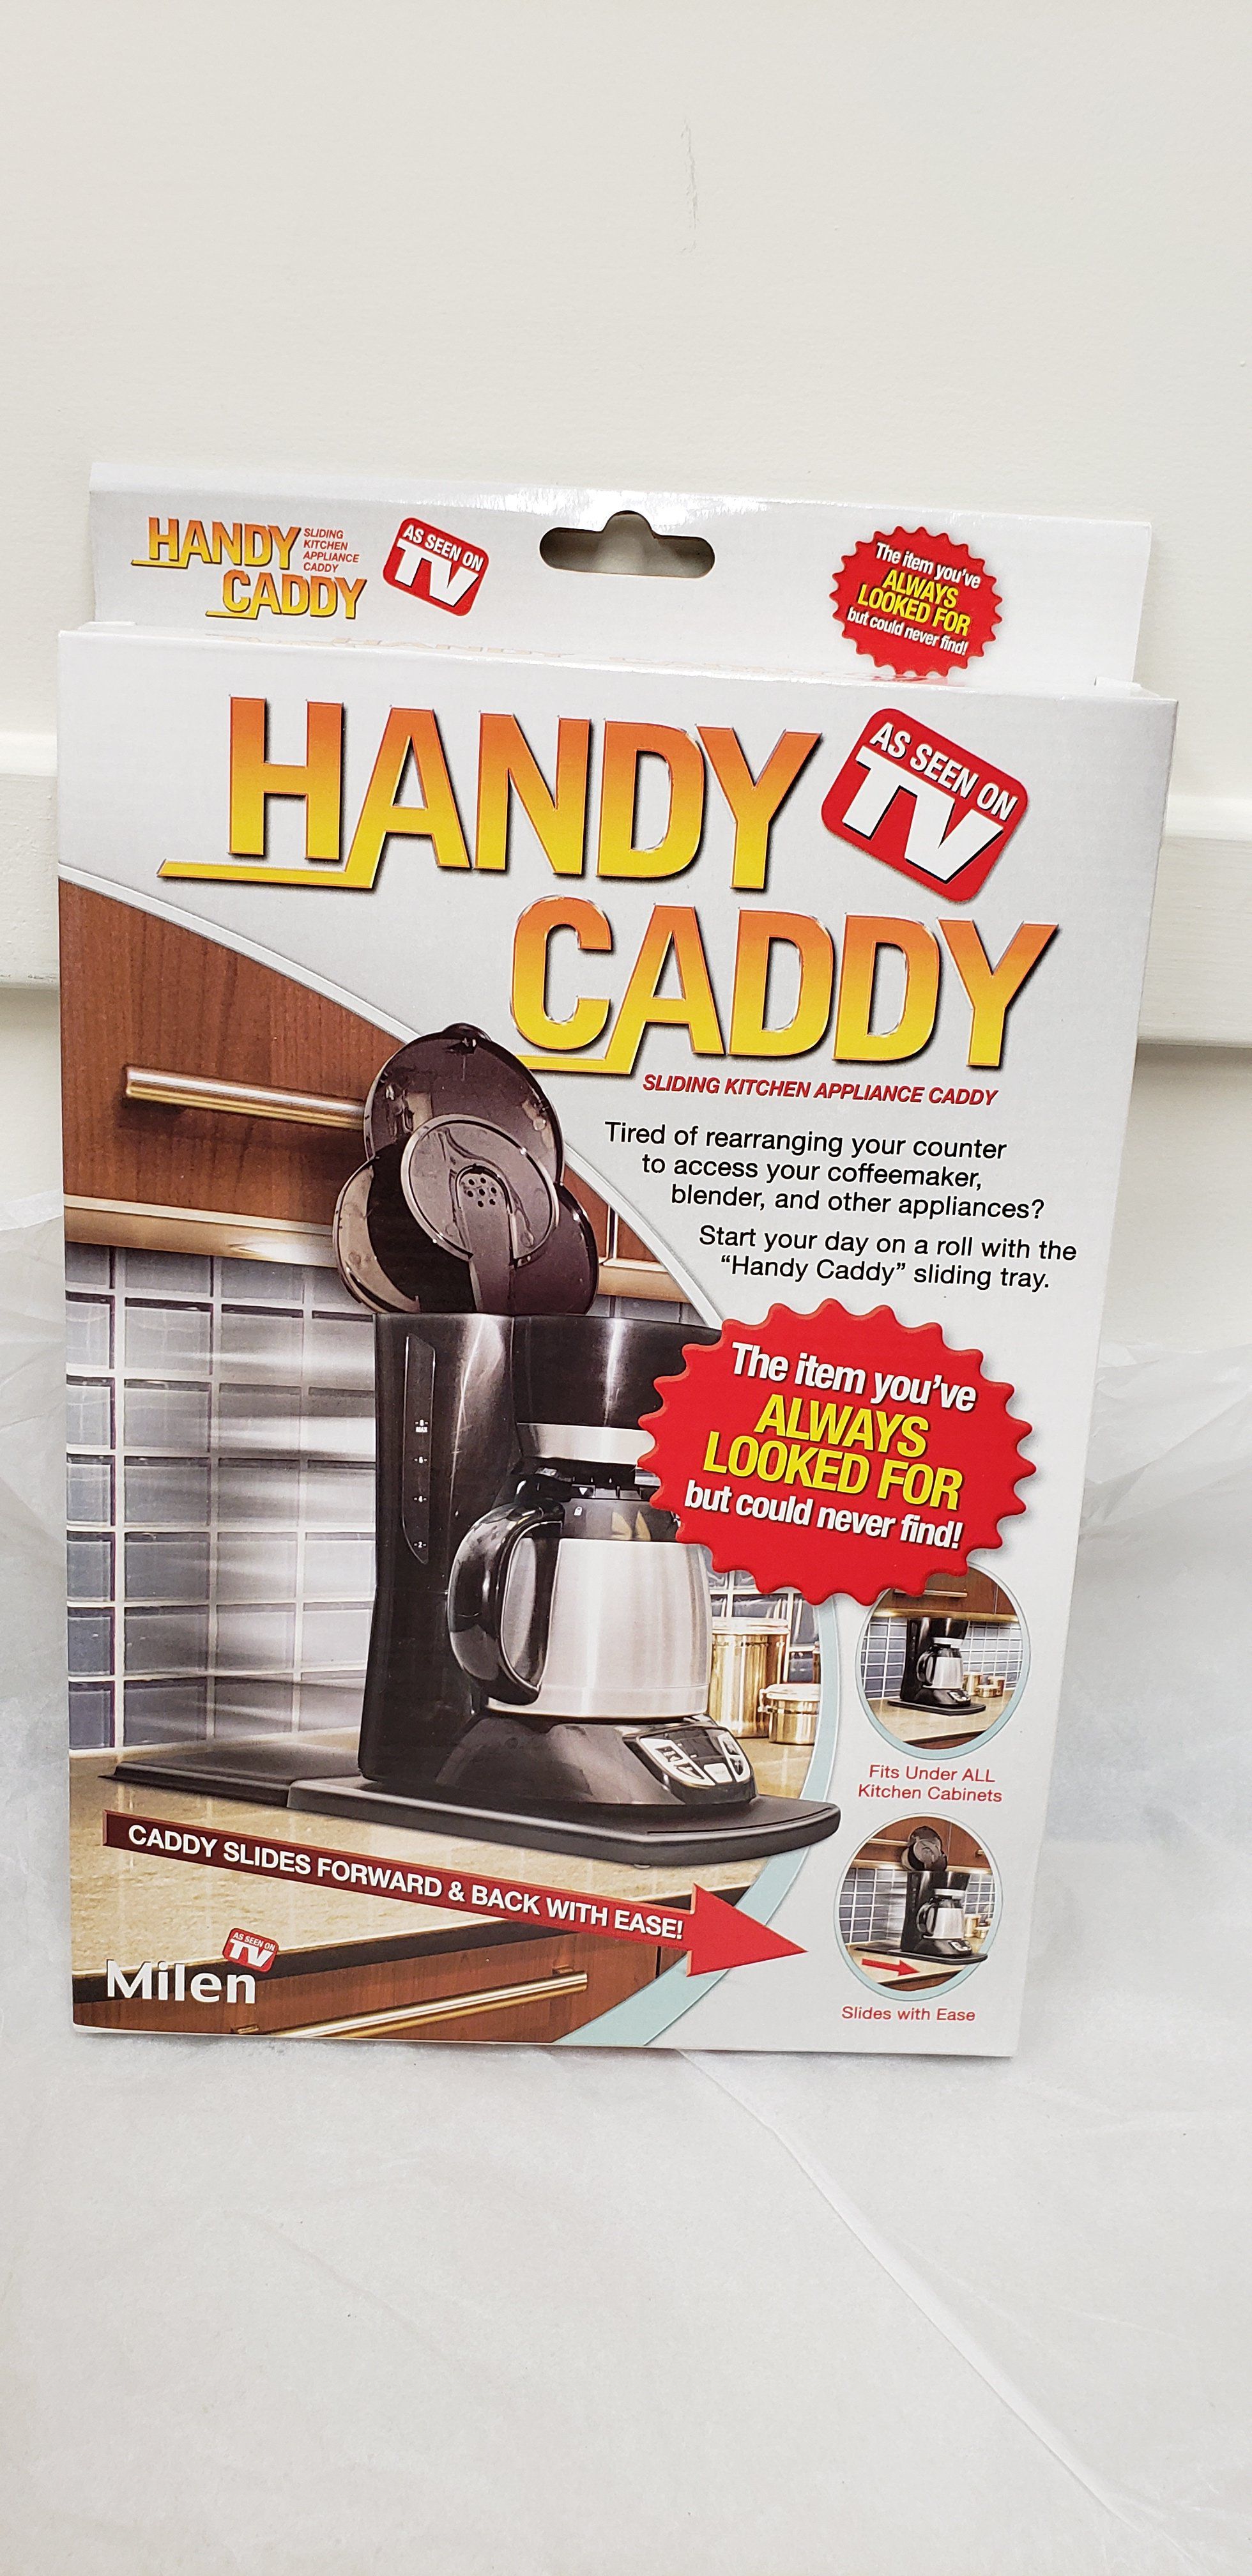 Handy Caddy Sliding Kitchen Appliance Caddy AS SEEN ON TV